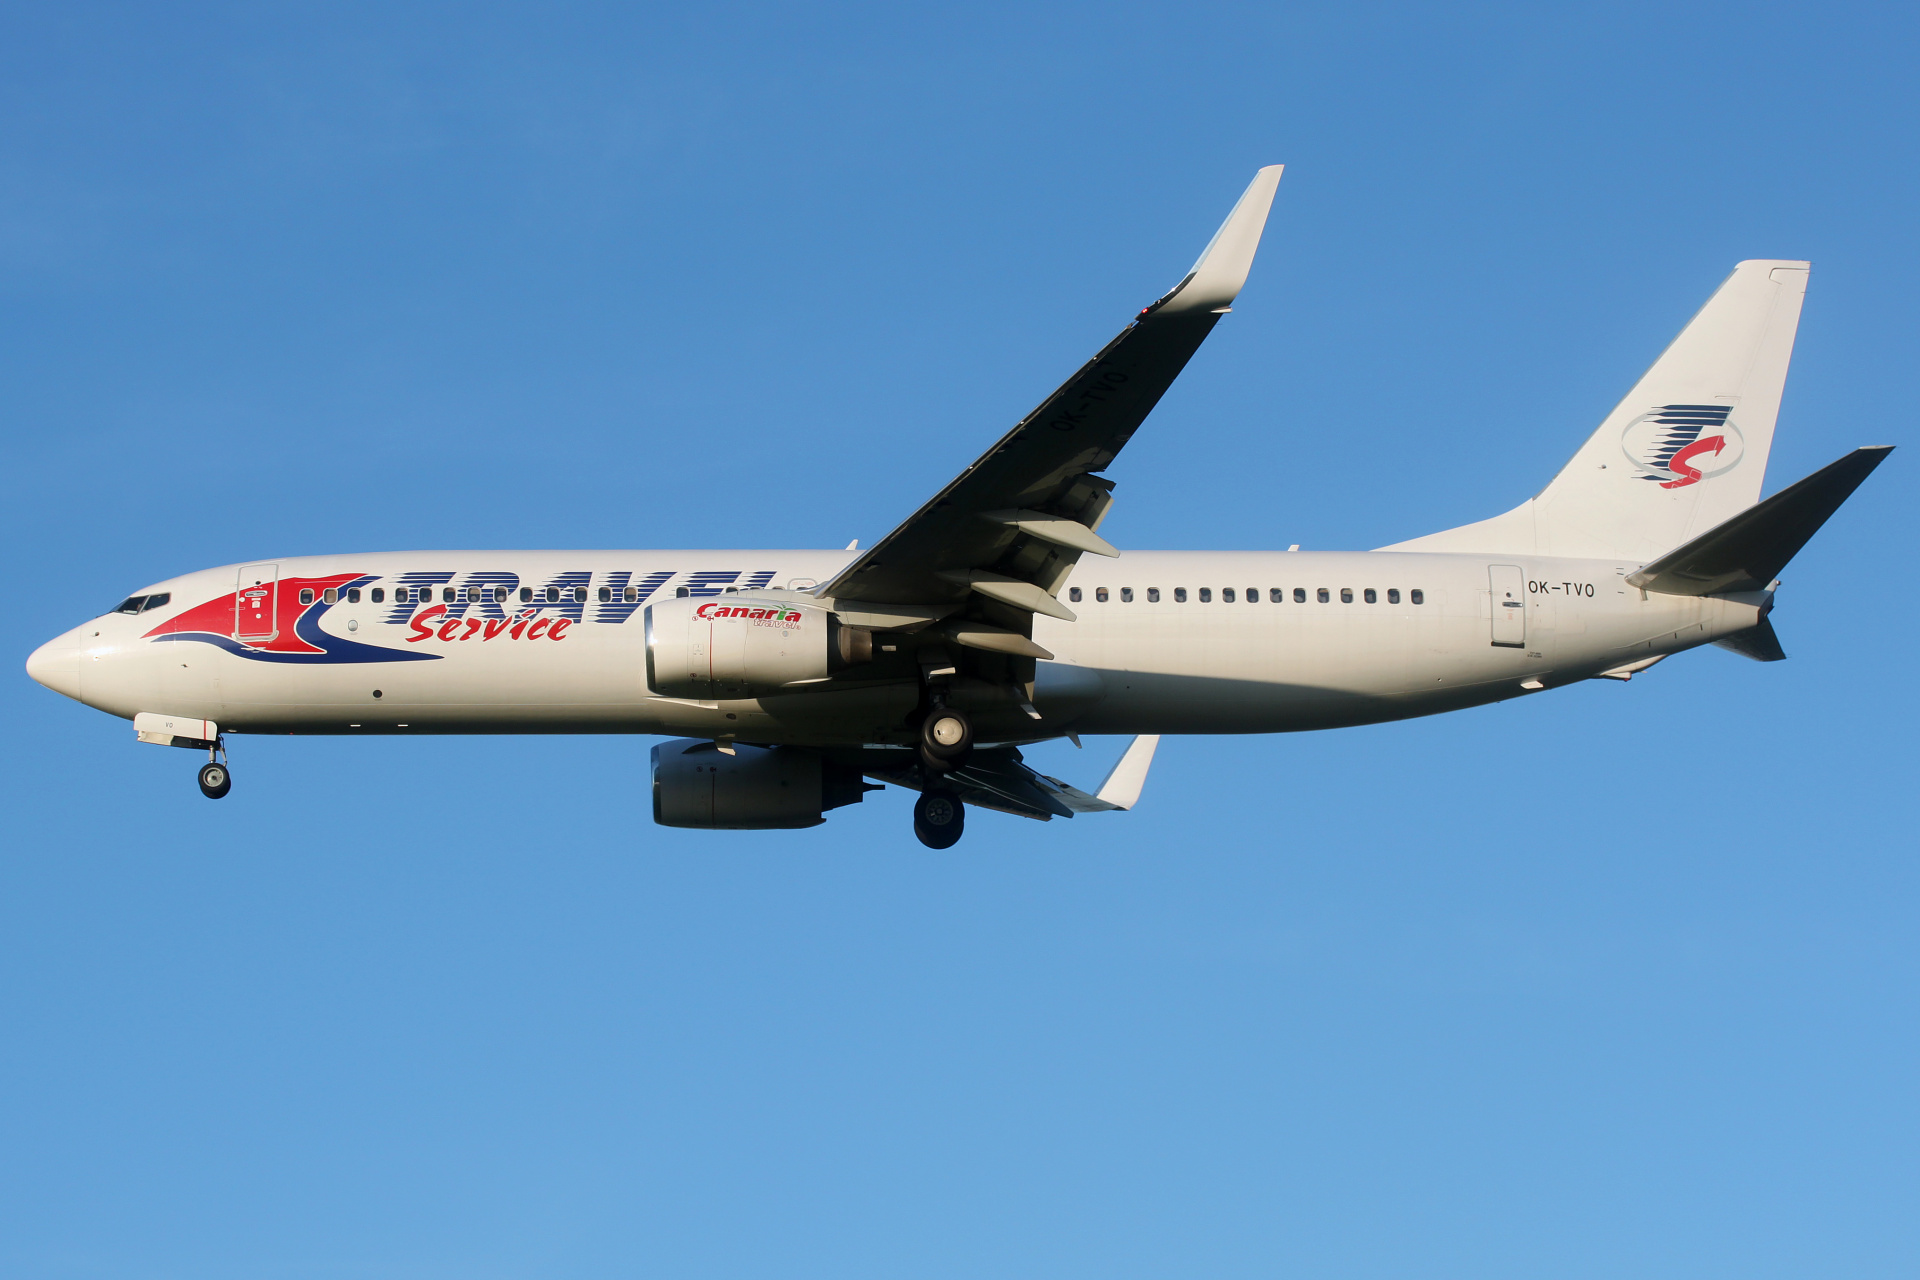 OK-TVO (Aircraft » EPWA Spotting » Boeing 737-800 » Travel Service Airlines)